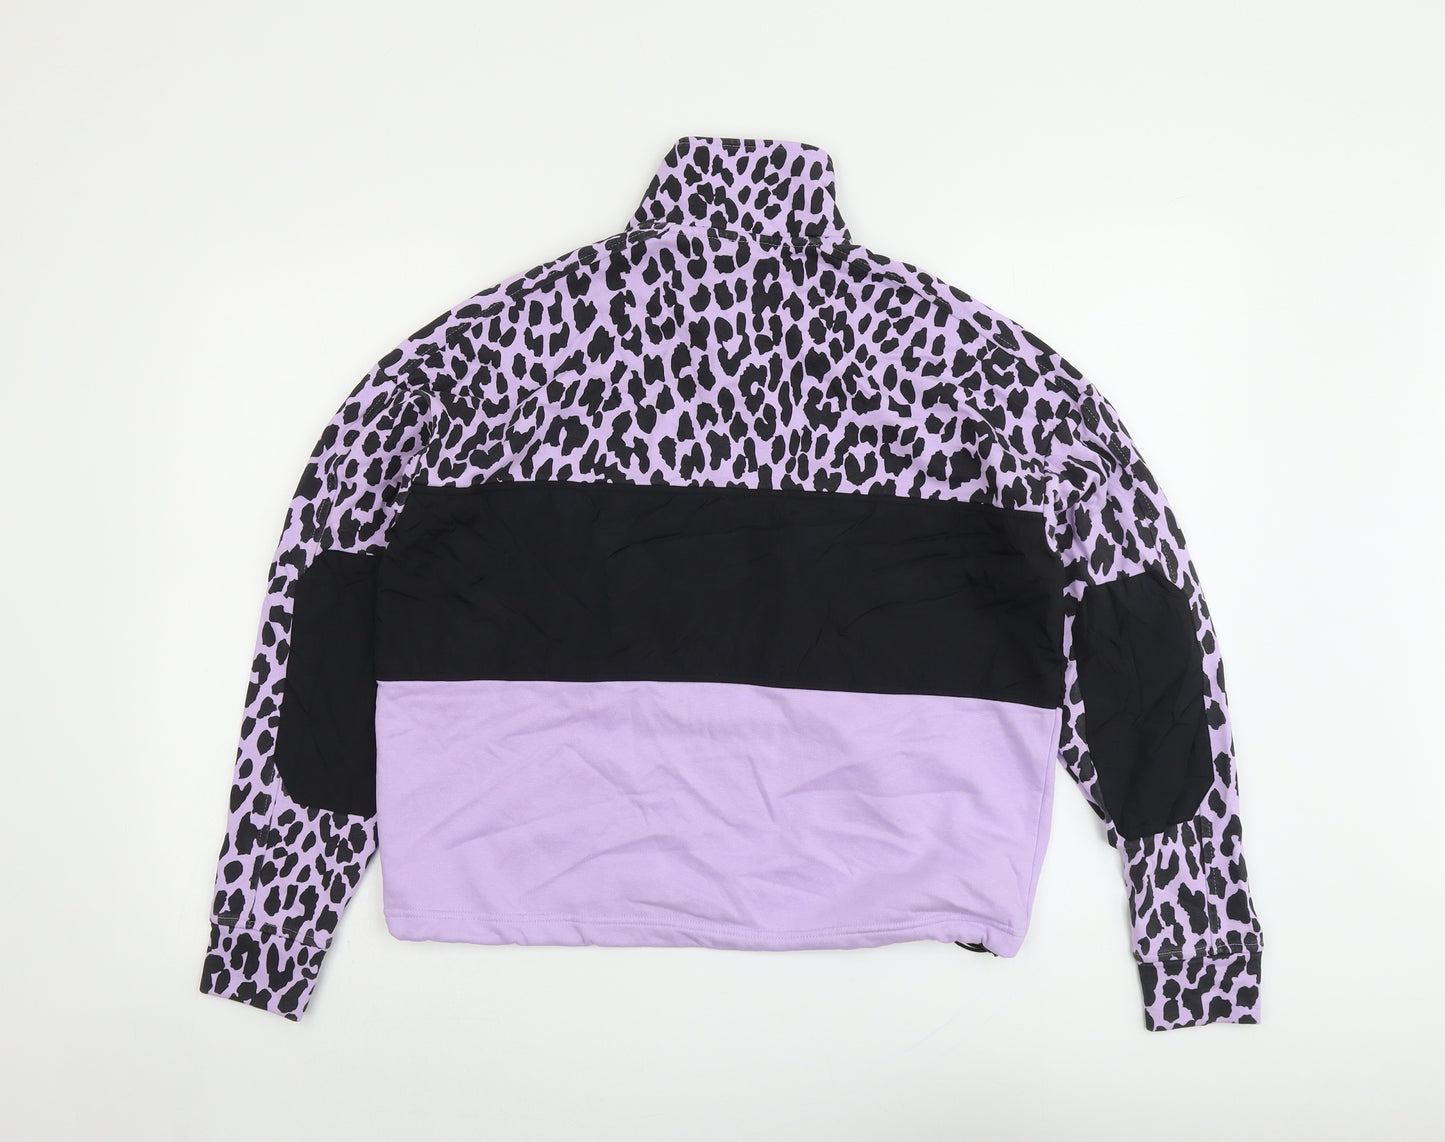 Colourwear Womens Purple Animal Print Cotton Pullover Sweatshirt Size S Zip - Leopard Pattern